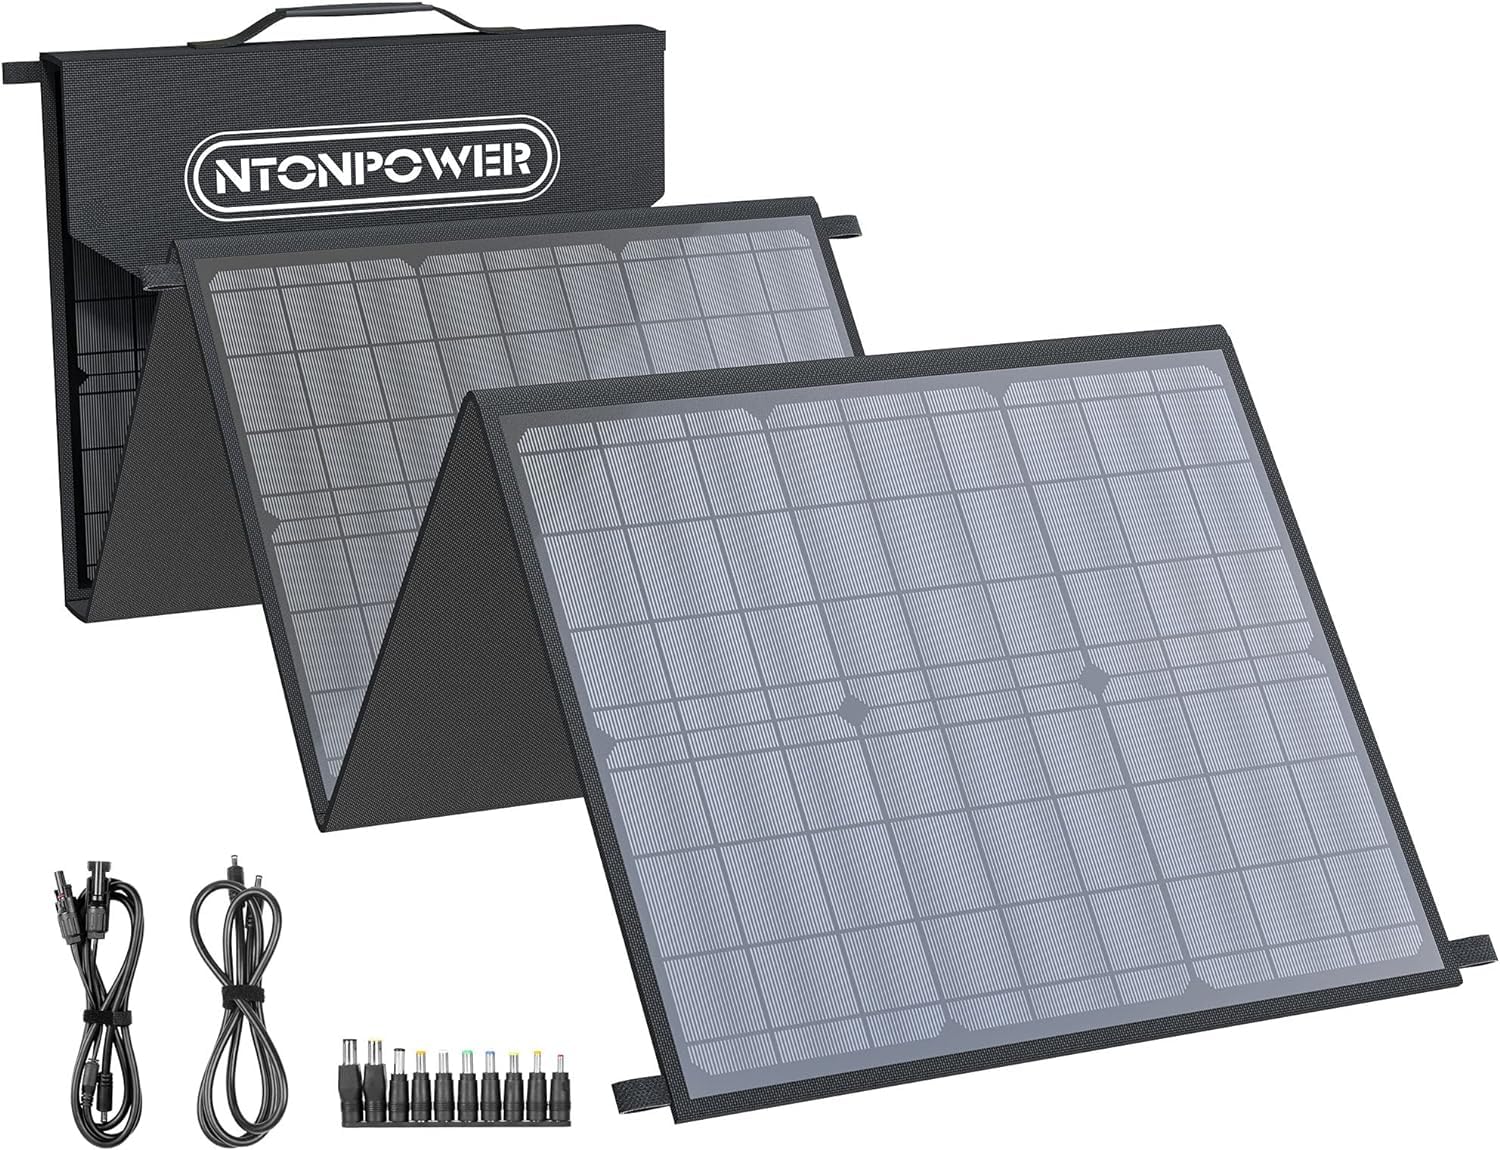 NTONPOWER Solarpanel Faltbar 100W, 5V~18V Monokristallin Solarmodul mit USB/DC Ausgang, Tragbar Solar Panel Hohe Effizienz Solartasche für Outdoor Camping